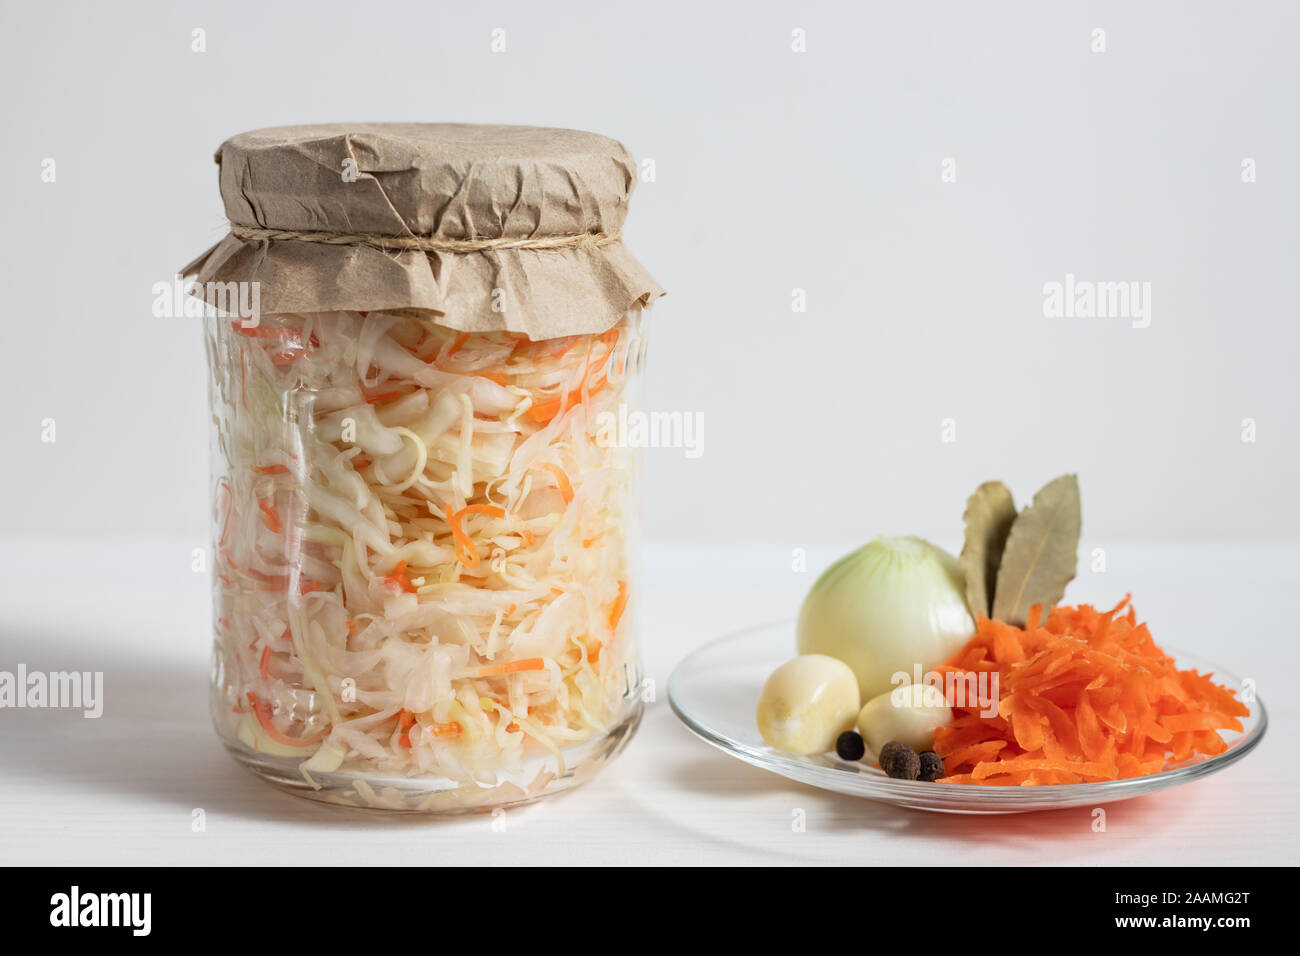 Homemade sauerkraut. Fermented food. Sauerkraut with carrots in a glass jar on a white wooden background. Stock Photo